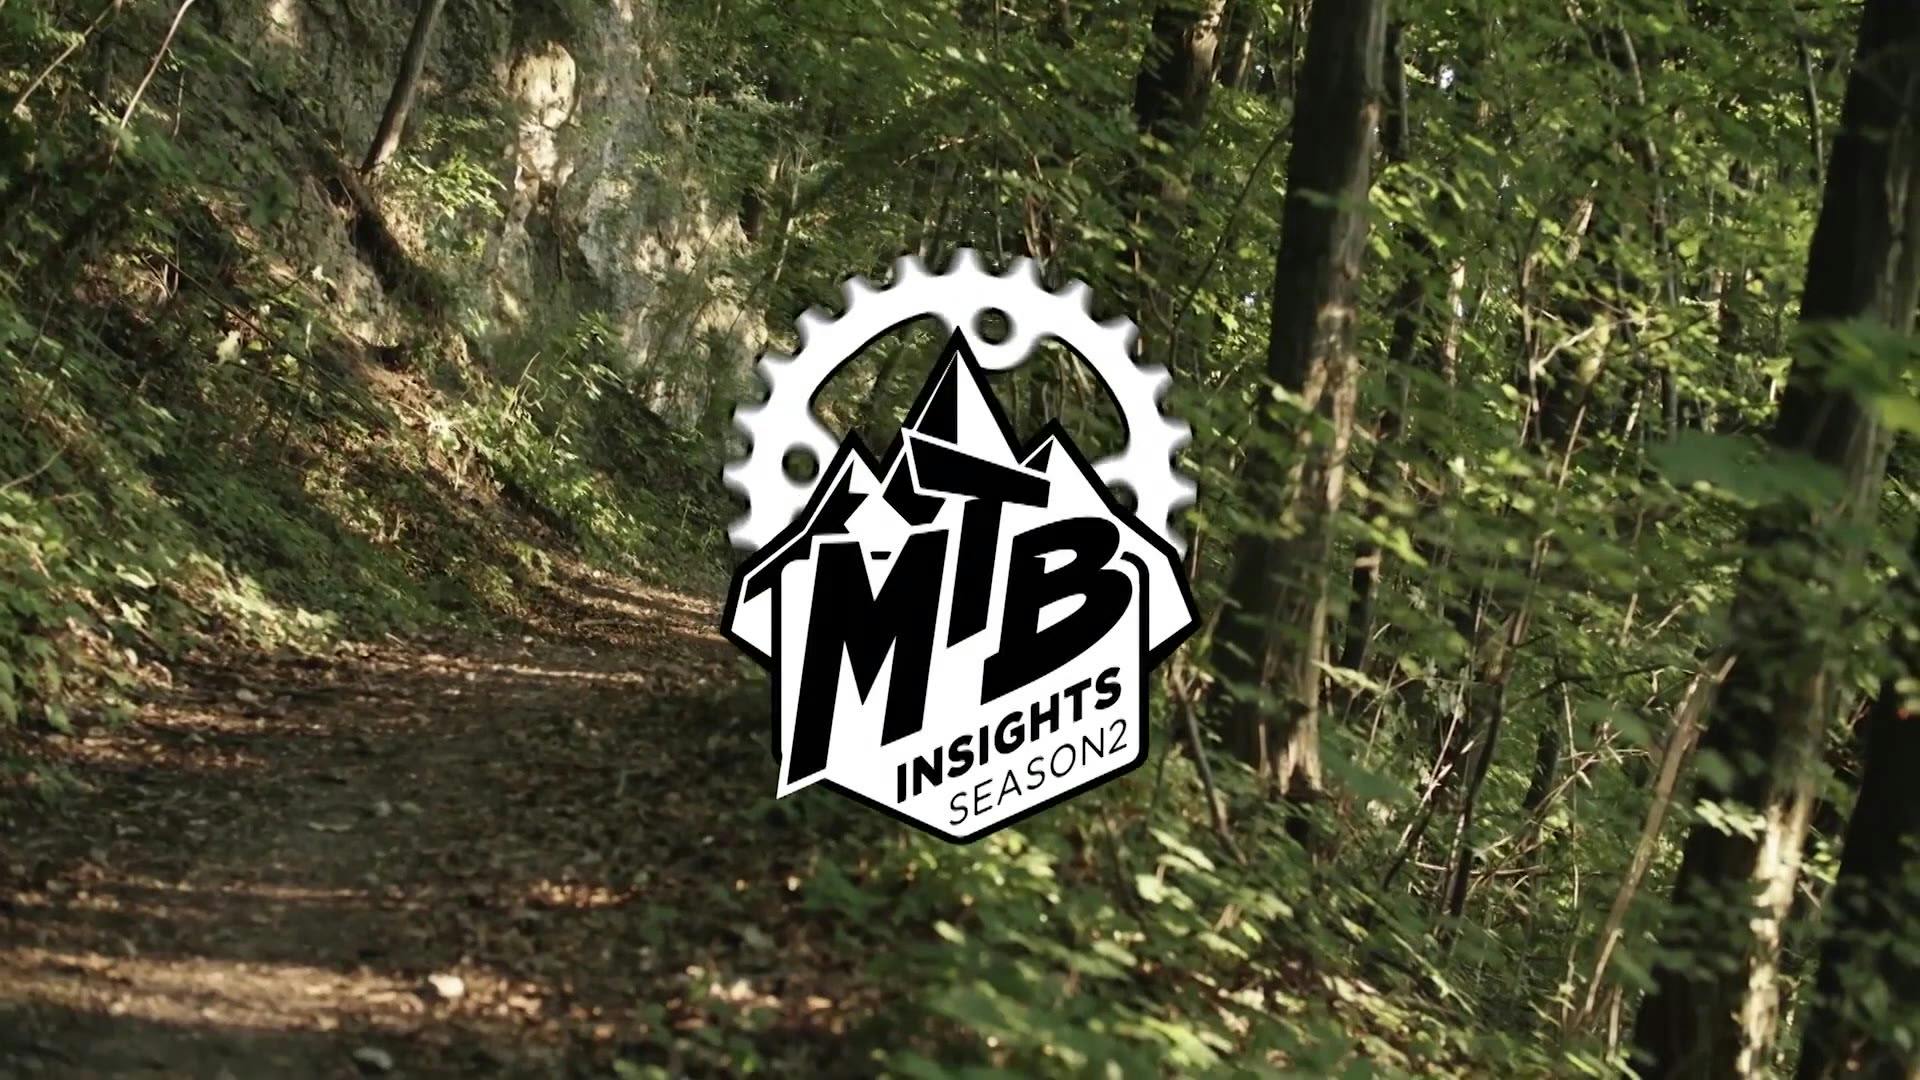 MTB Insights Season 2 | Trailer